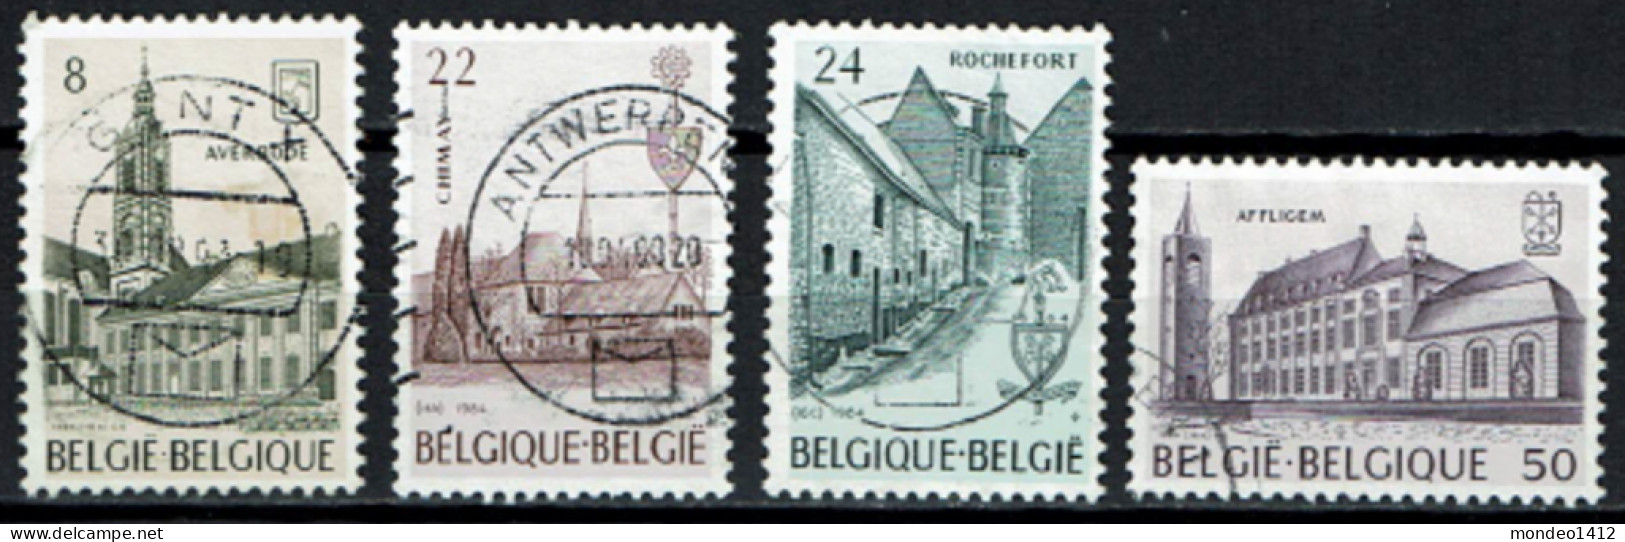 België 1984 OBP 2146/2149 - Y&T 2146/49 - Abdijen, Abbayes, Abbeys - Averbode, Chimay, Rochefort, Affligem - Gebraucht